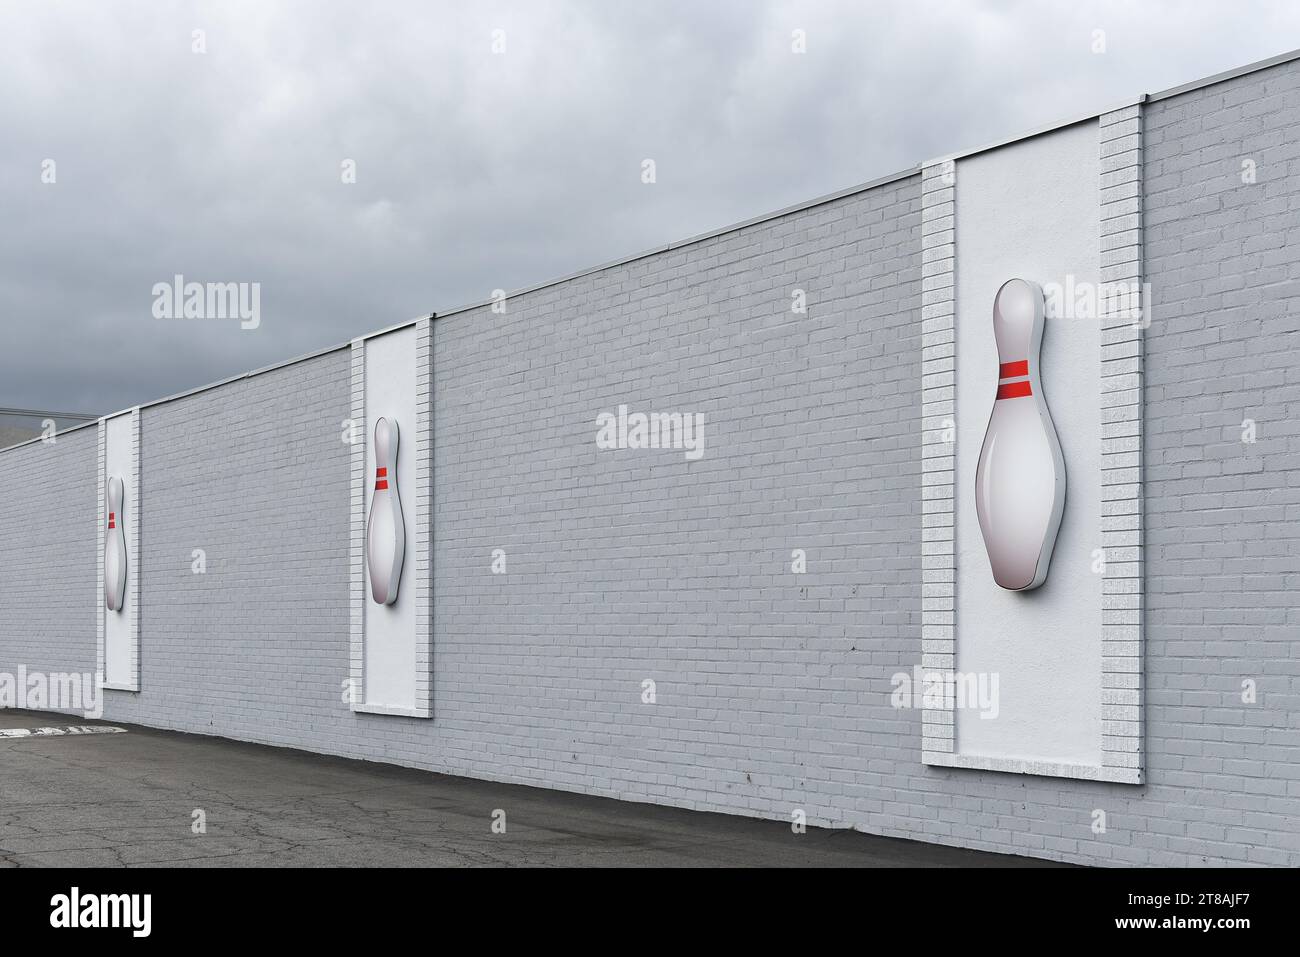 WESTMINSTER, KALIFORNIEN - 25. OCT 2023: Bowlingplätze an der Seite des Westminster Lanes Bowling Alley Gebäudes. Stockfoto